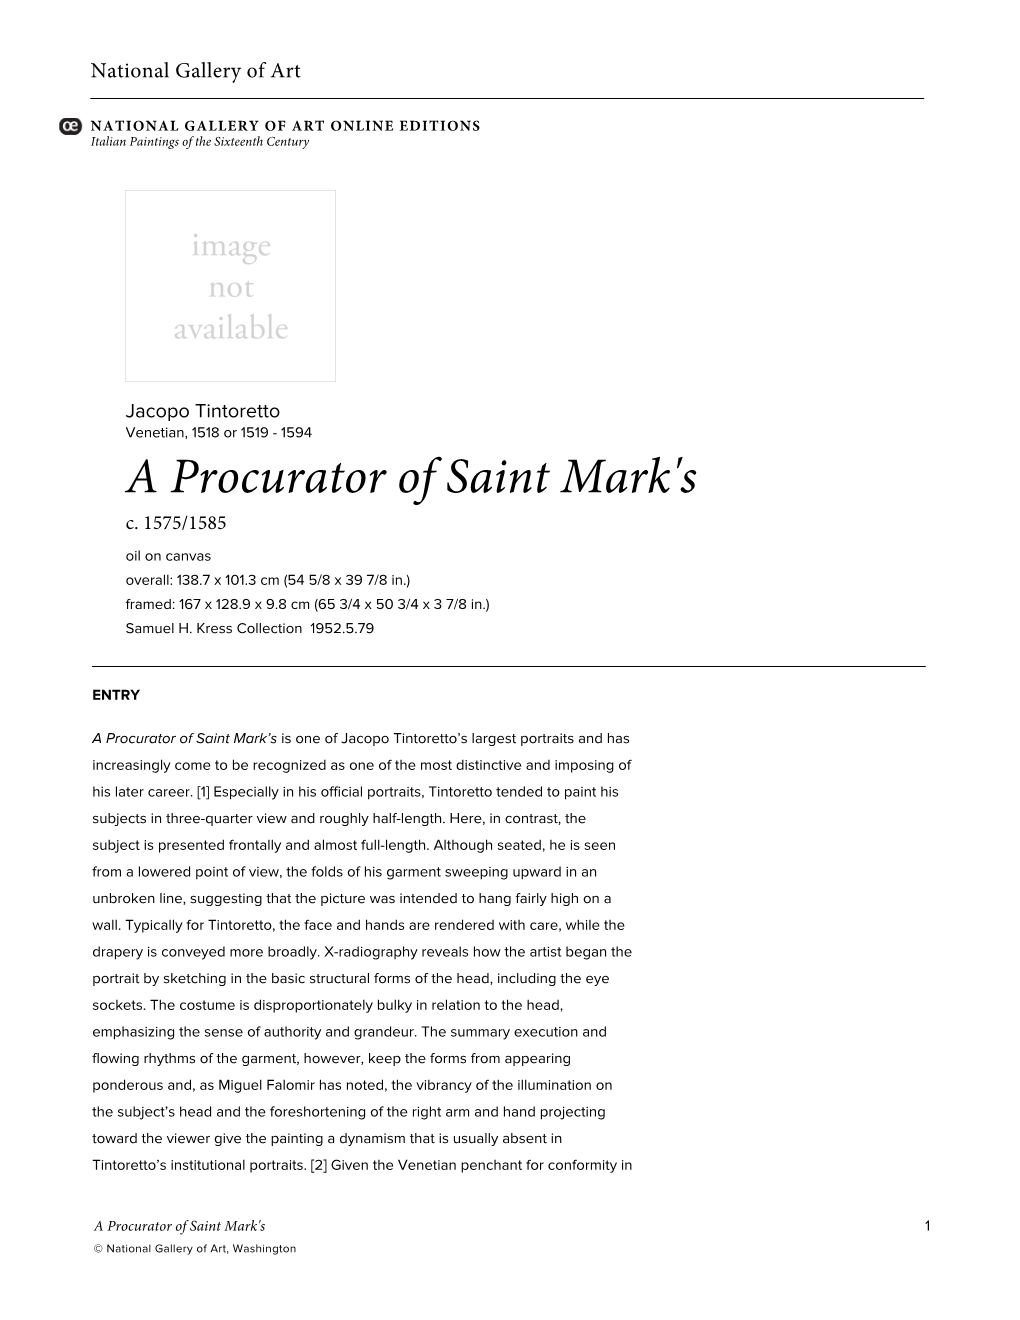 A Procurator of Saint Mark's C